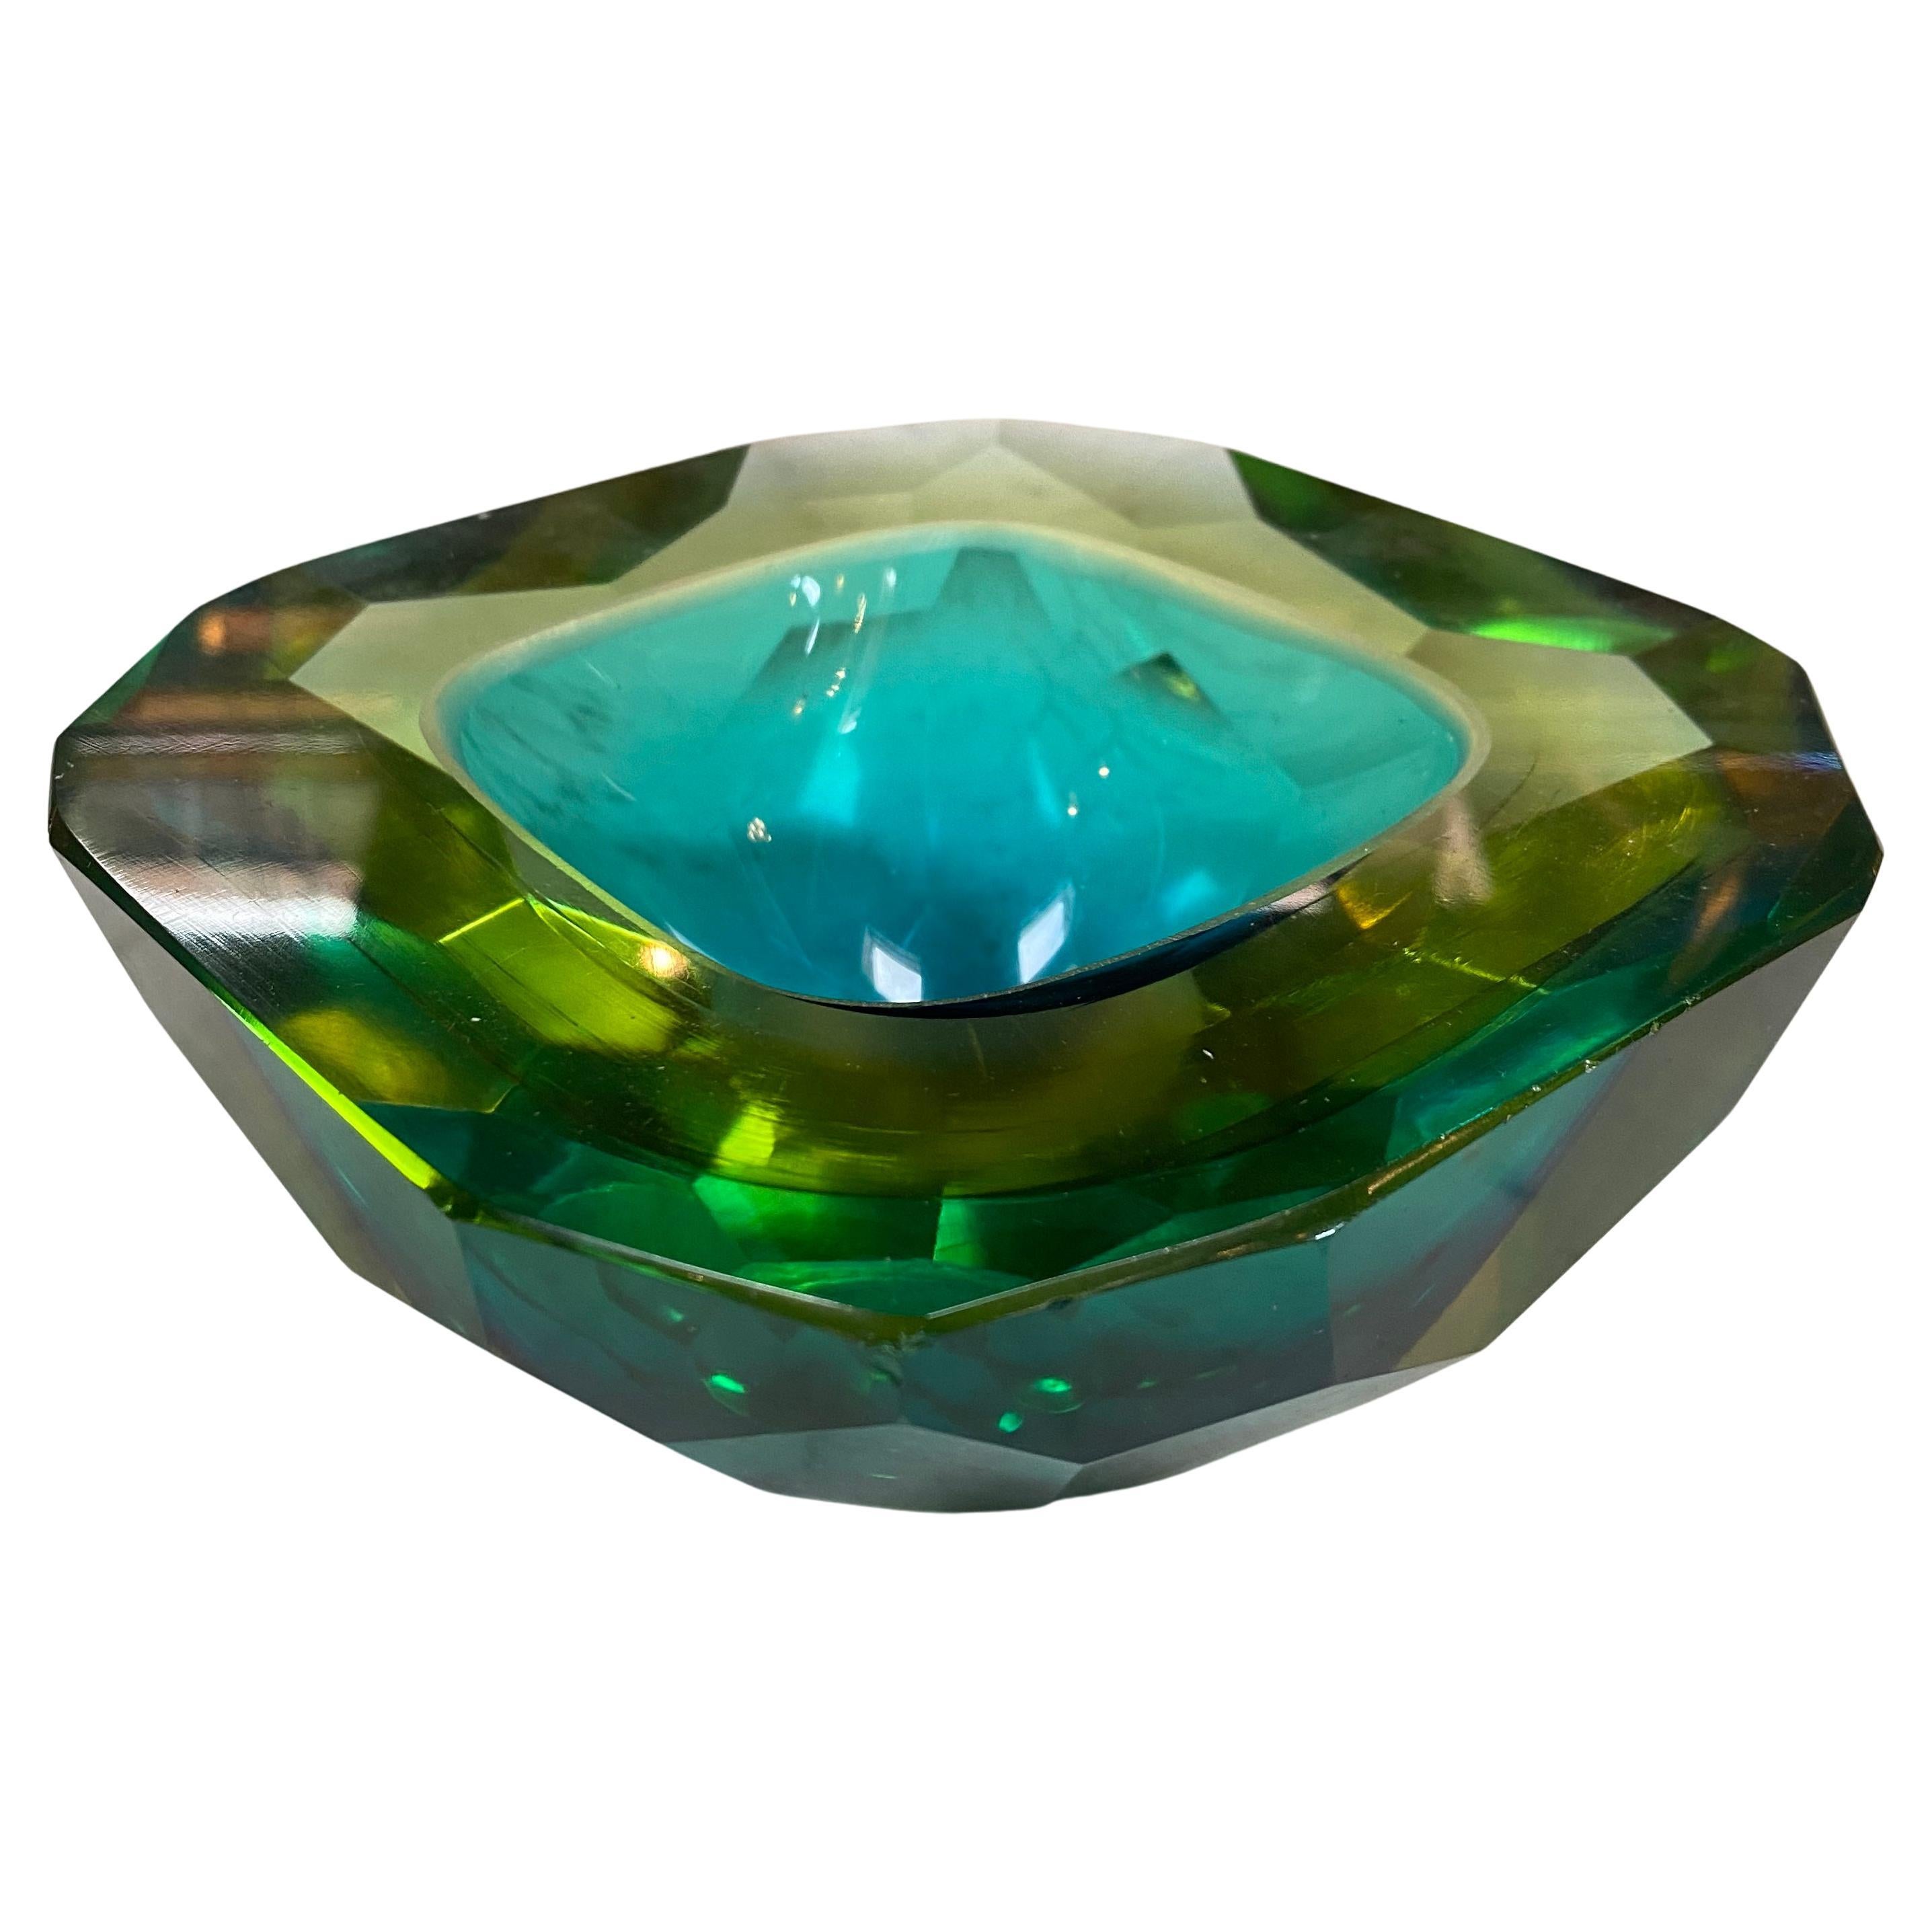 Magnifique bol décoratif italien en cristal vert 1950